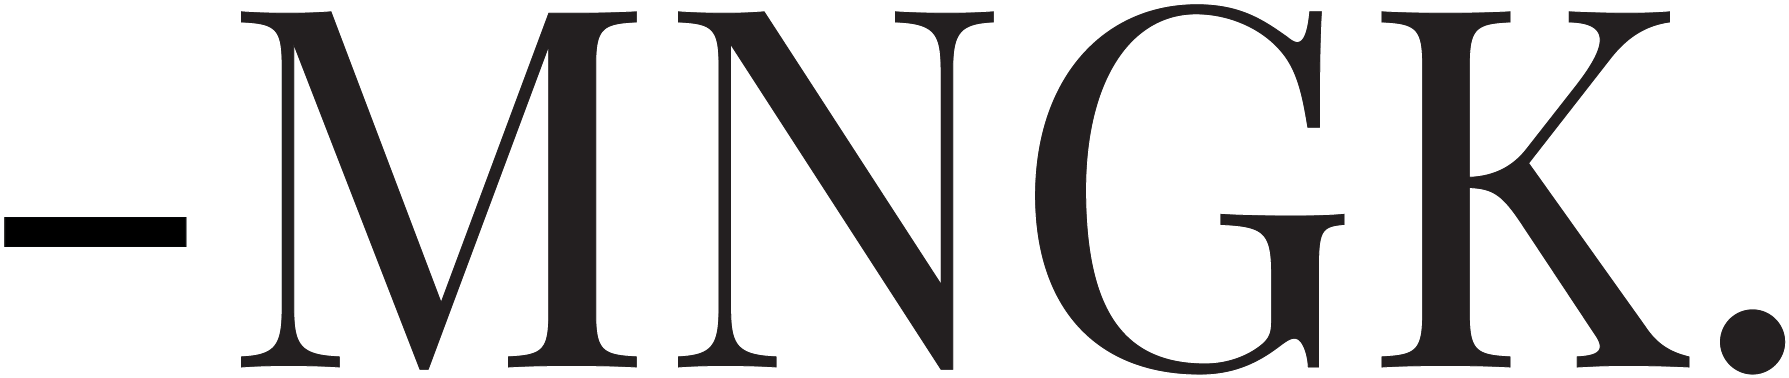 logo Managerka